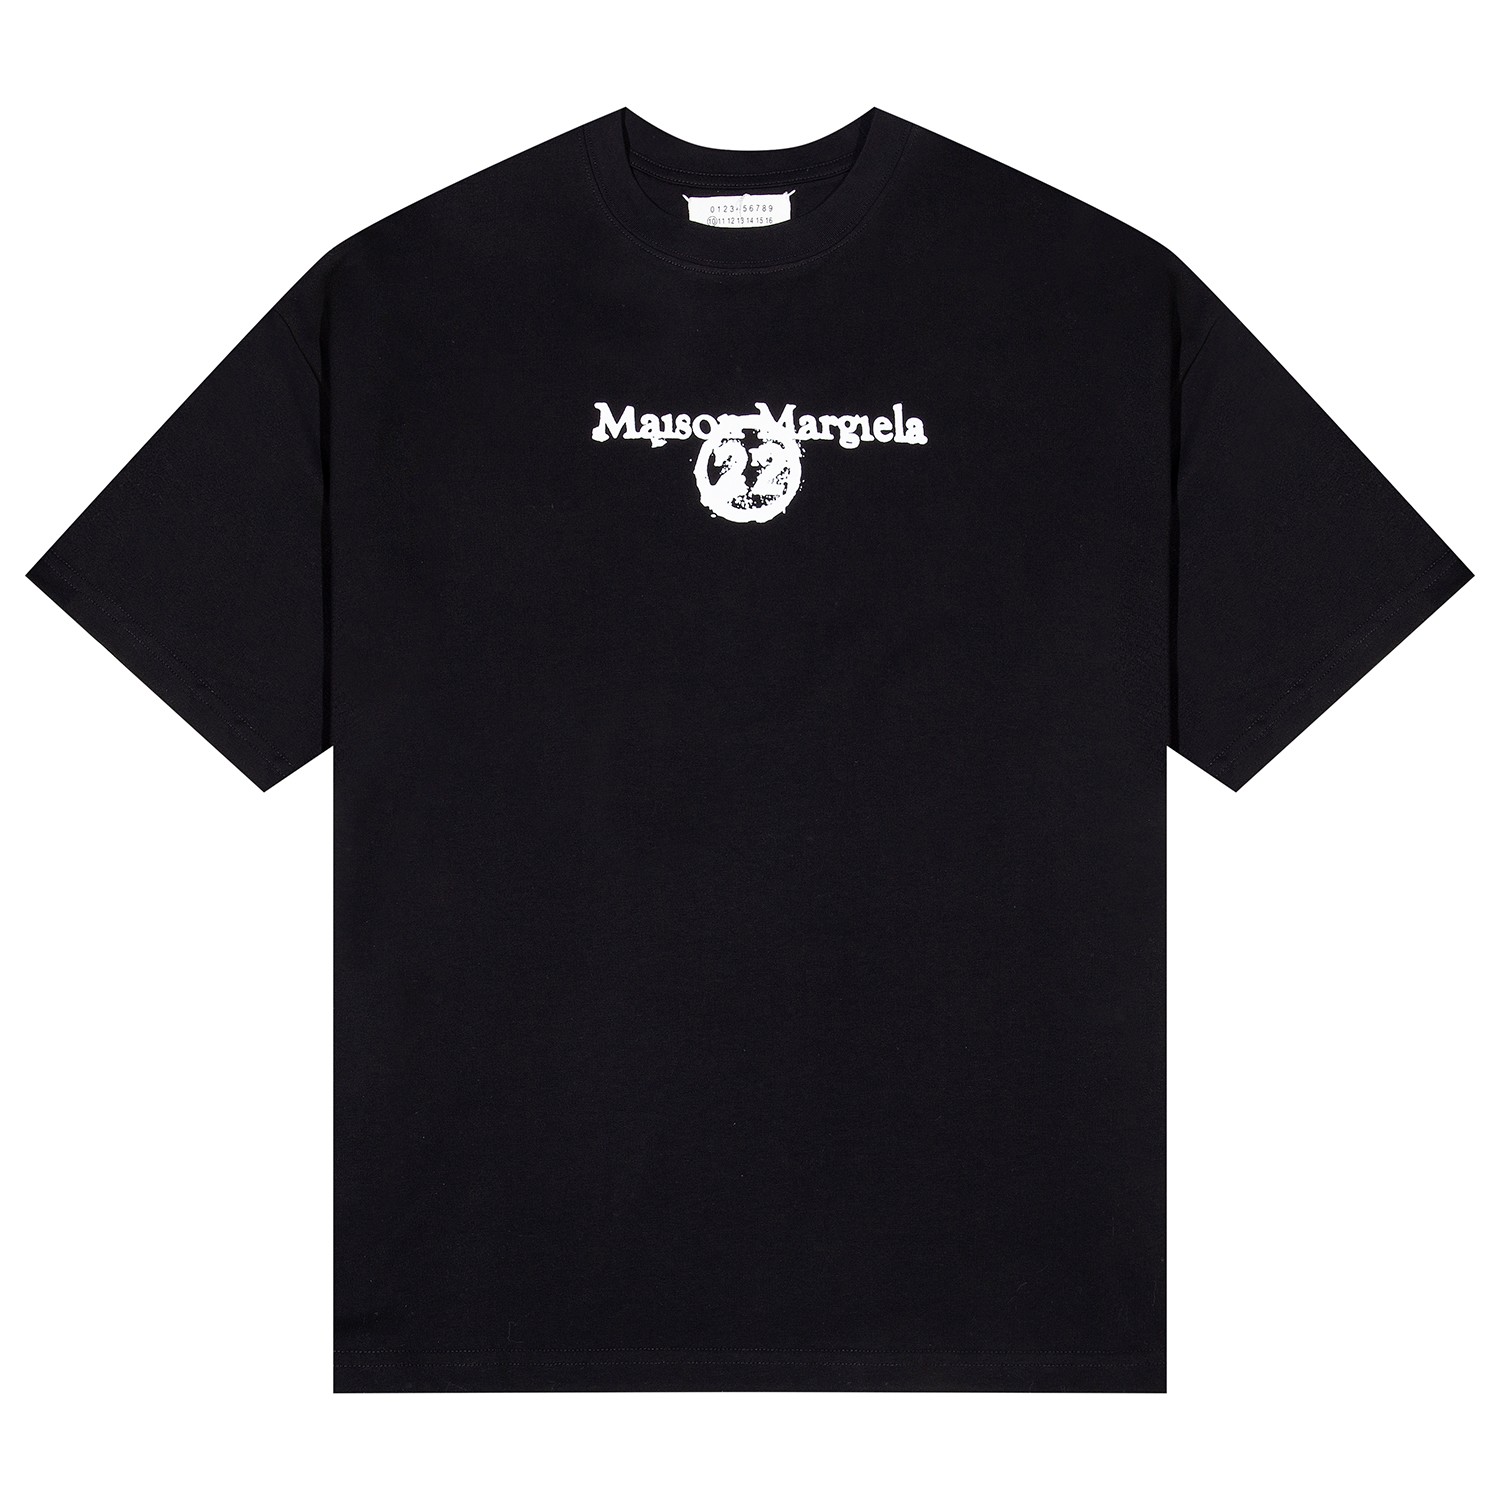 Balenciaga Clothing T-Shirt Apricot Color Black Printing Unisex Combed Cotton Short Sleeve